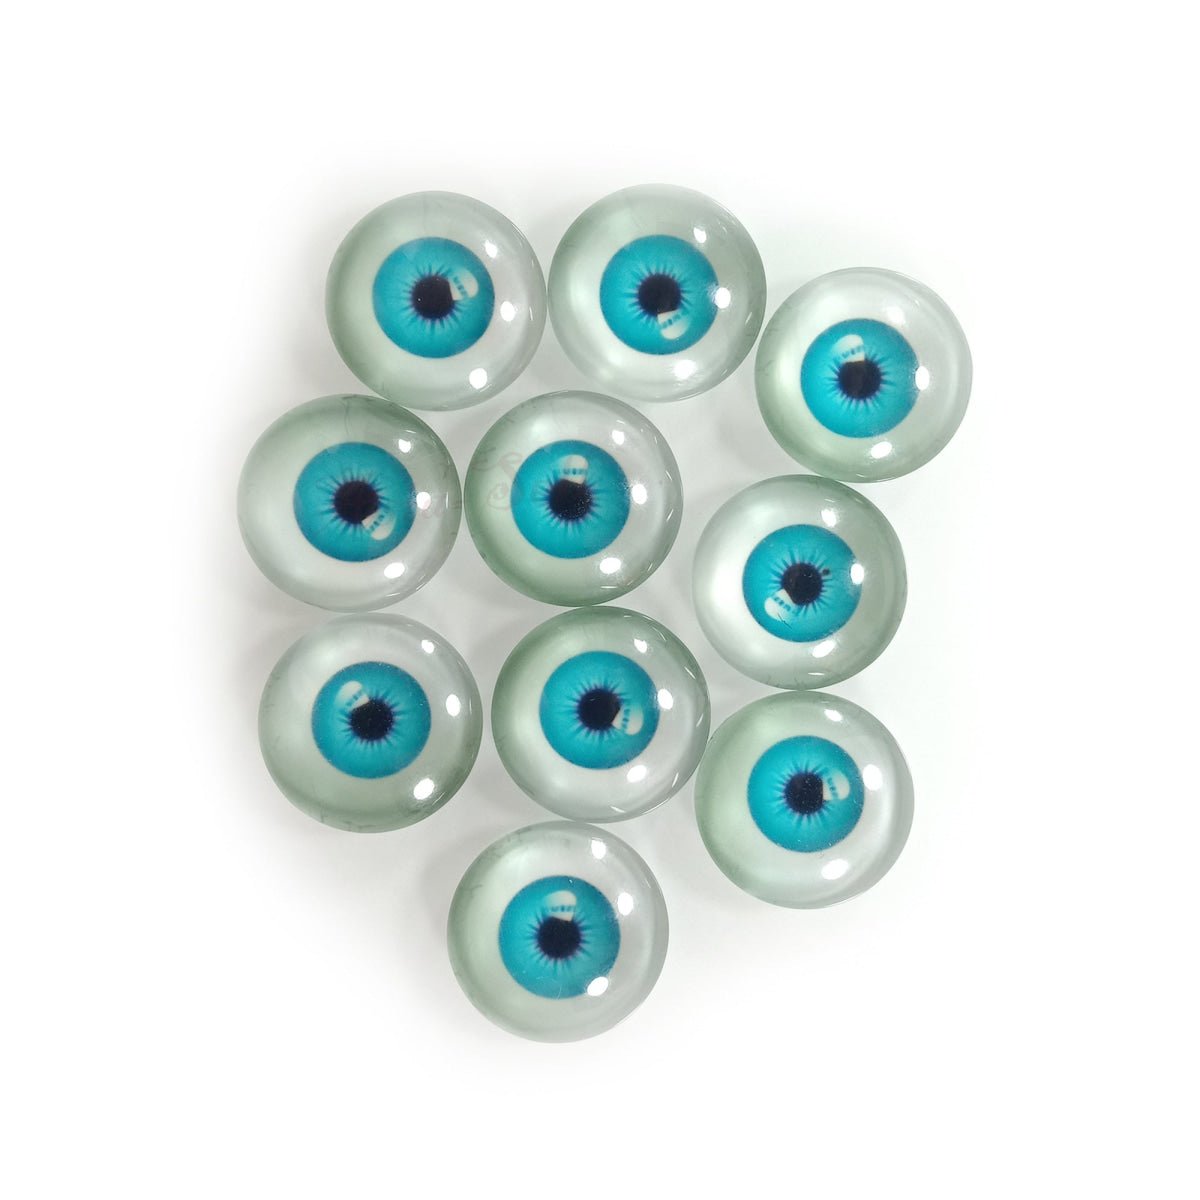 10pcs 20mm Glass Eyes Cabochons Dolls Human Eyes Animal Eye Accessories Dragon - Blue - - Asia Sell